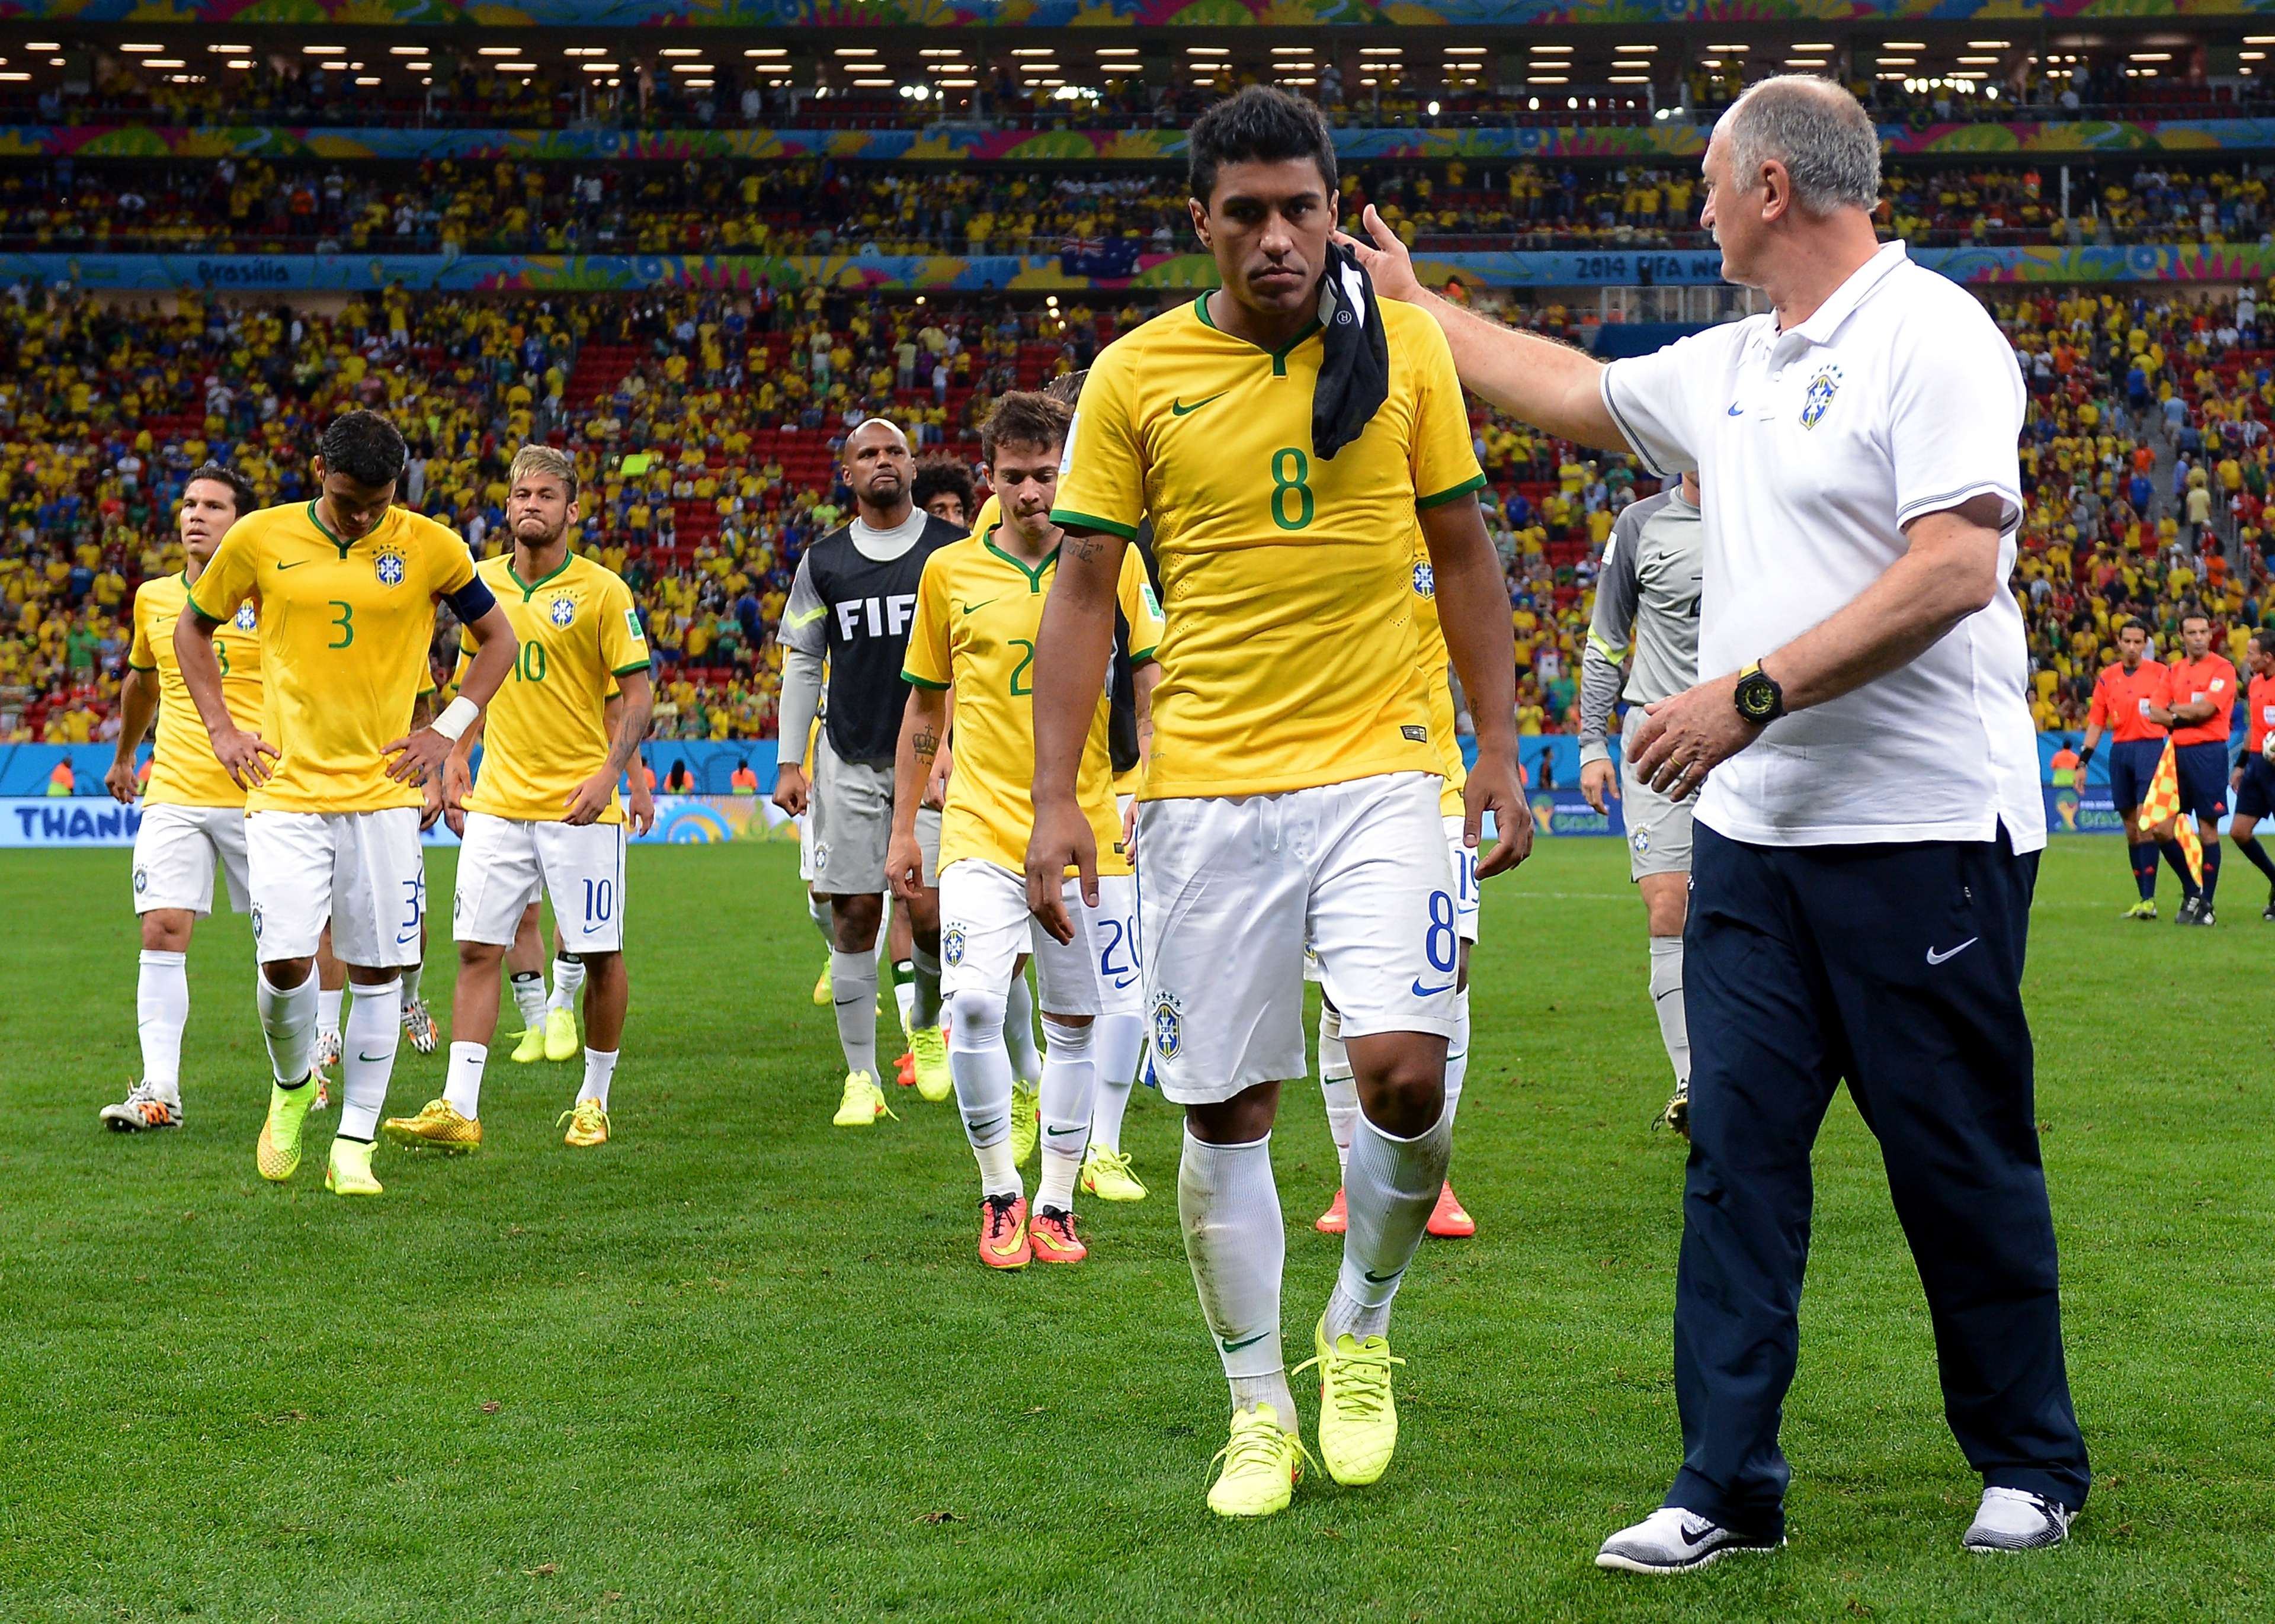 Paulinho and Scolari - Brazil and Netherlands - World Cup 140712